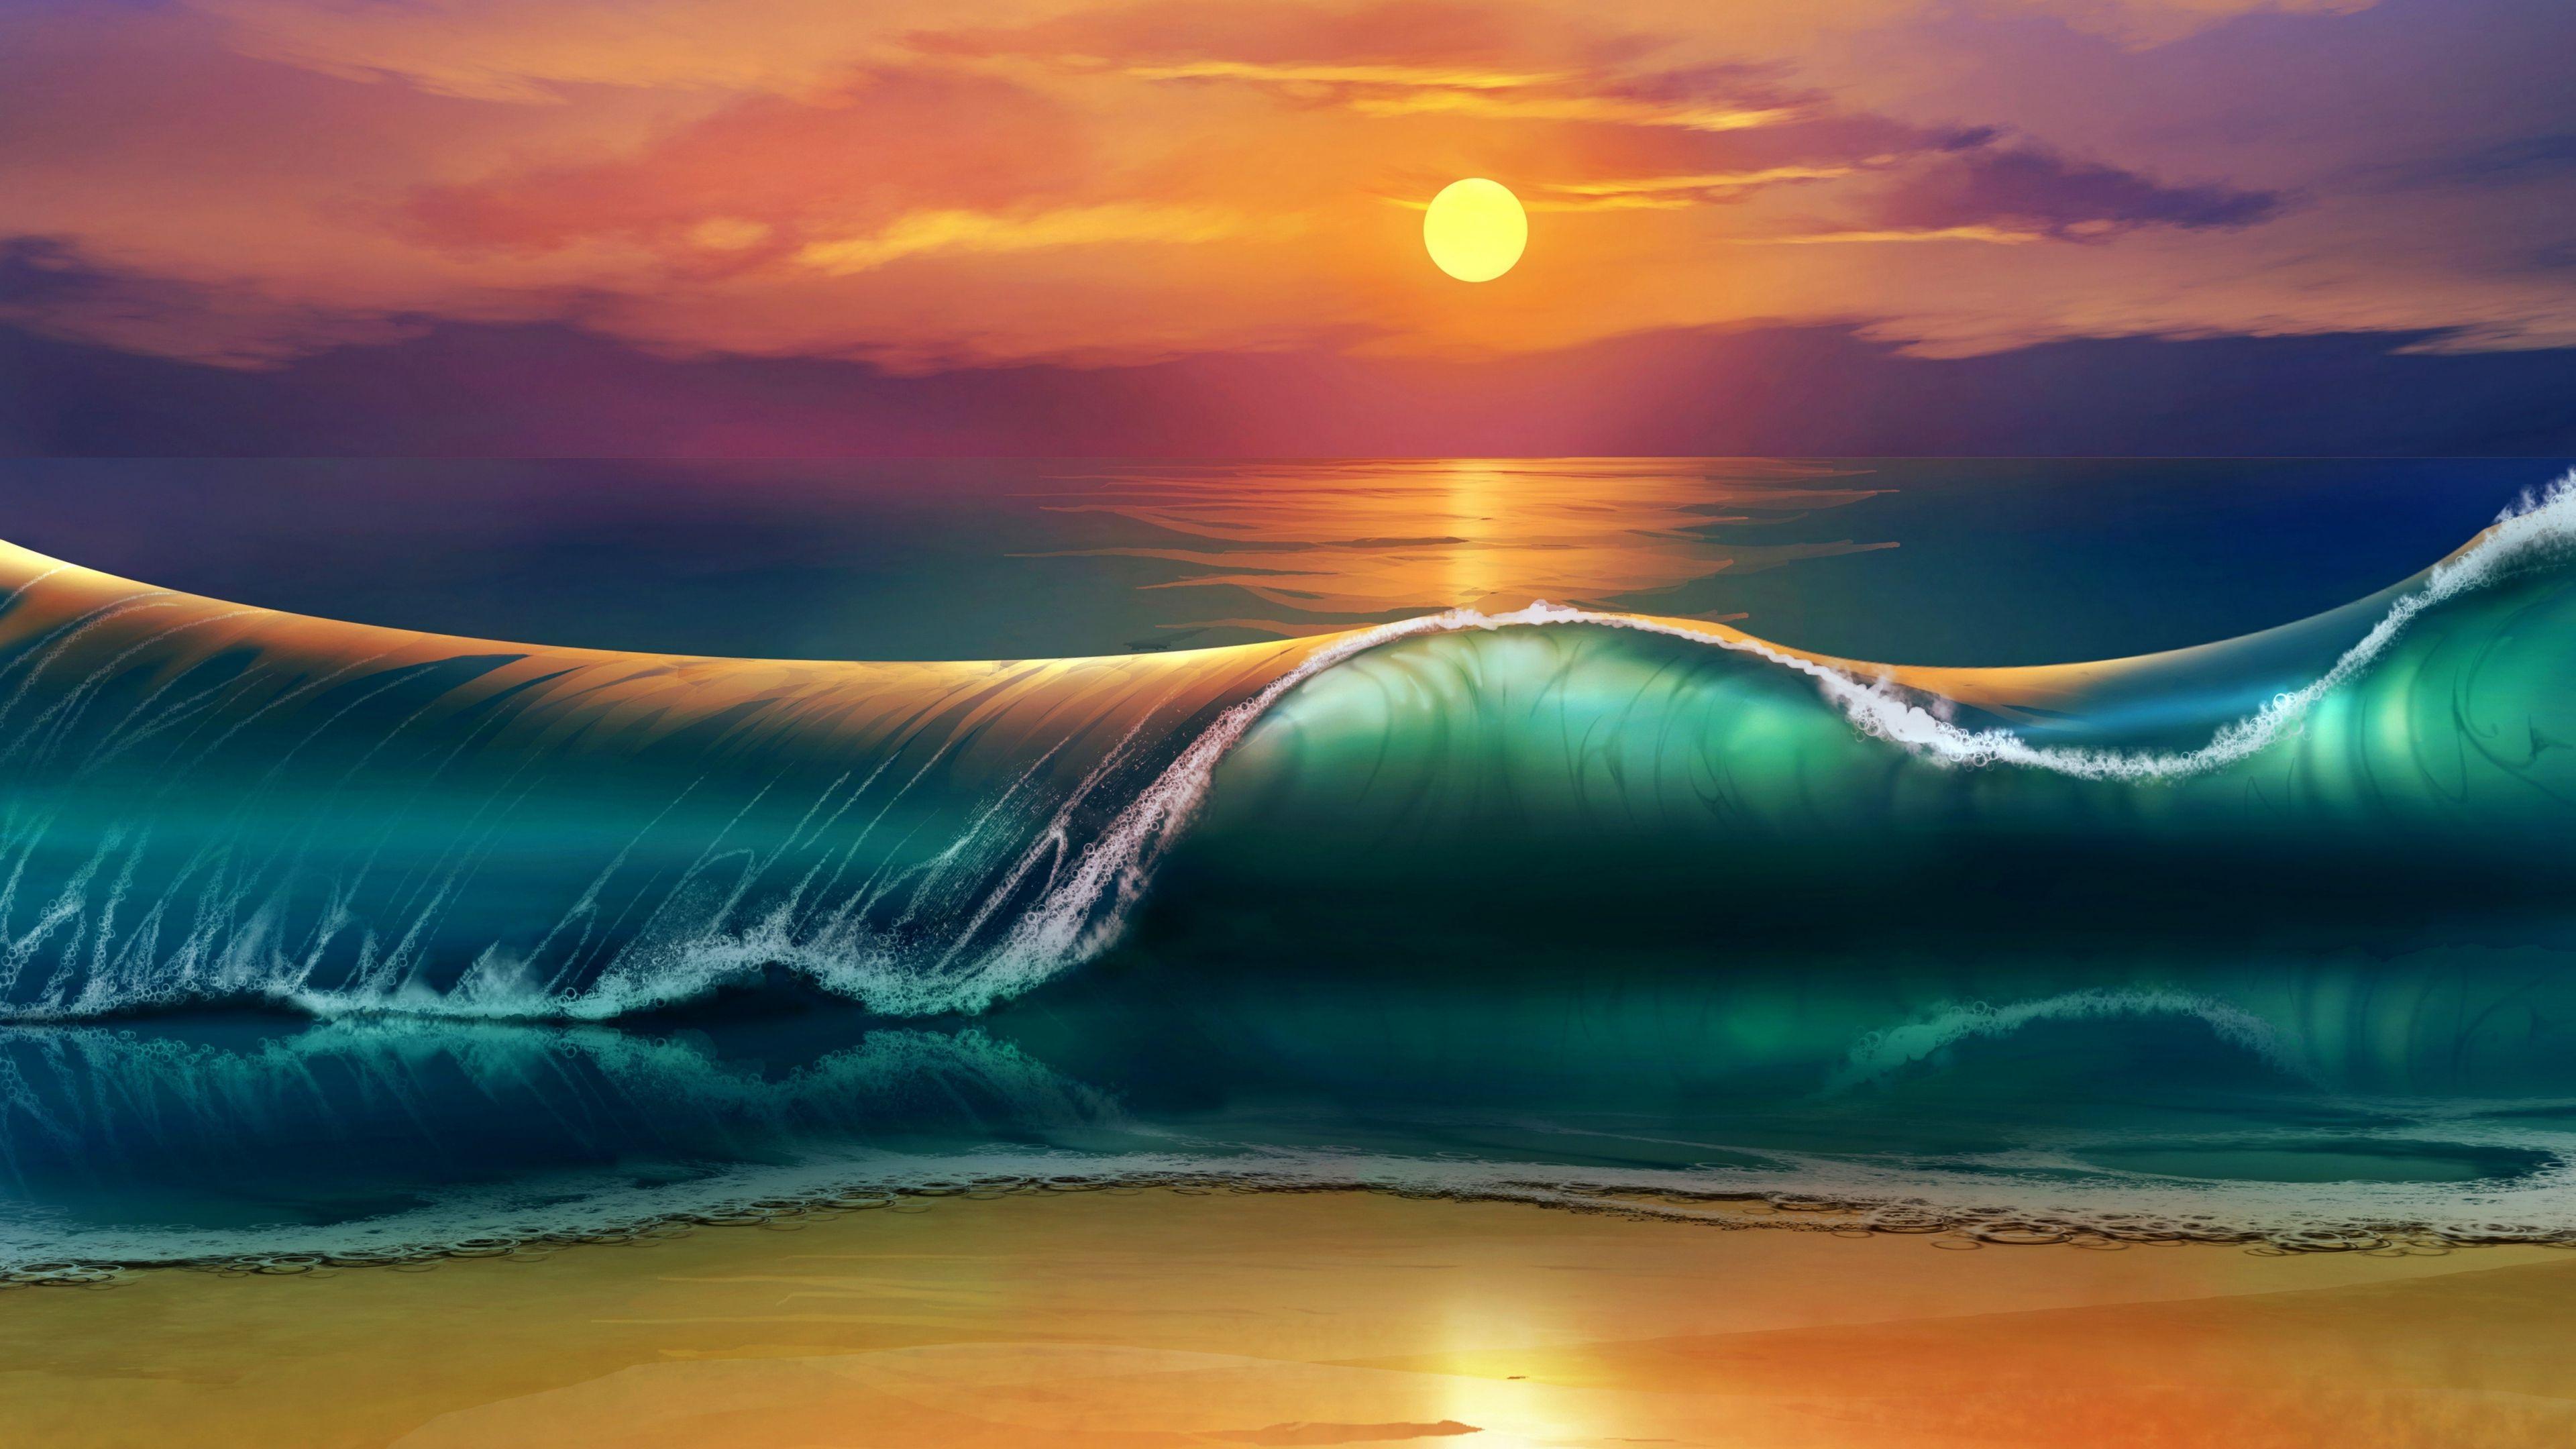 The Sunset Art, HD Artist, 4k Wallpaper, Image, Background